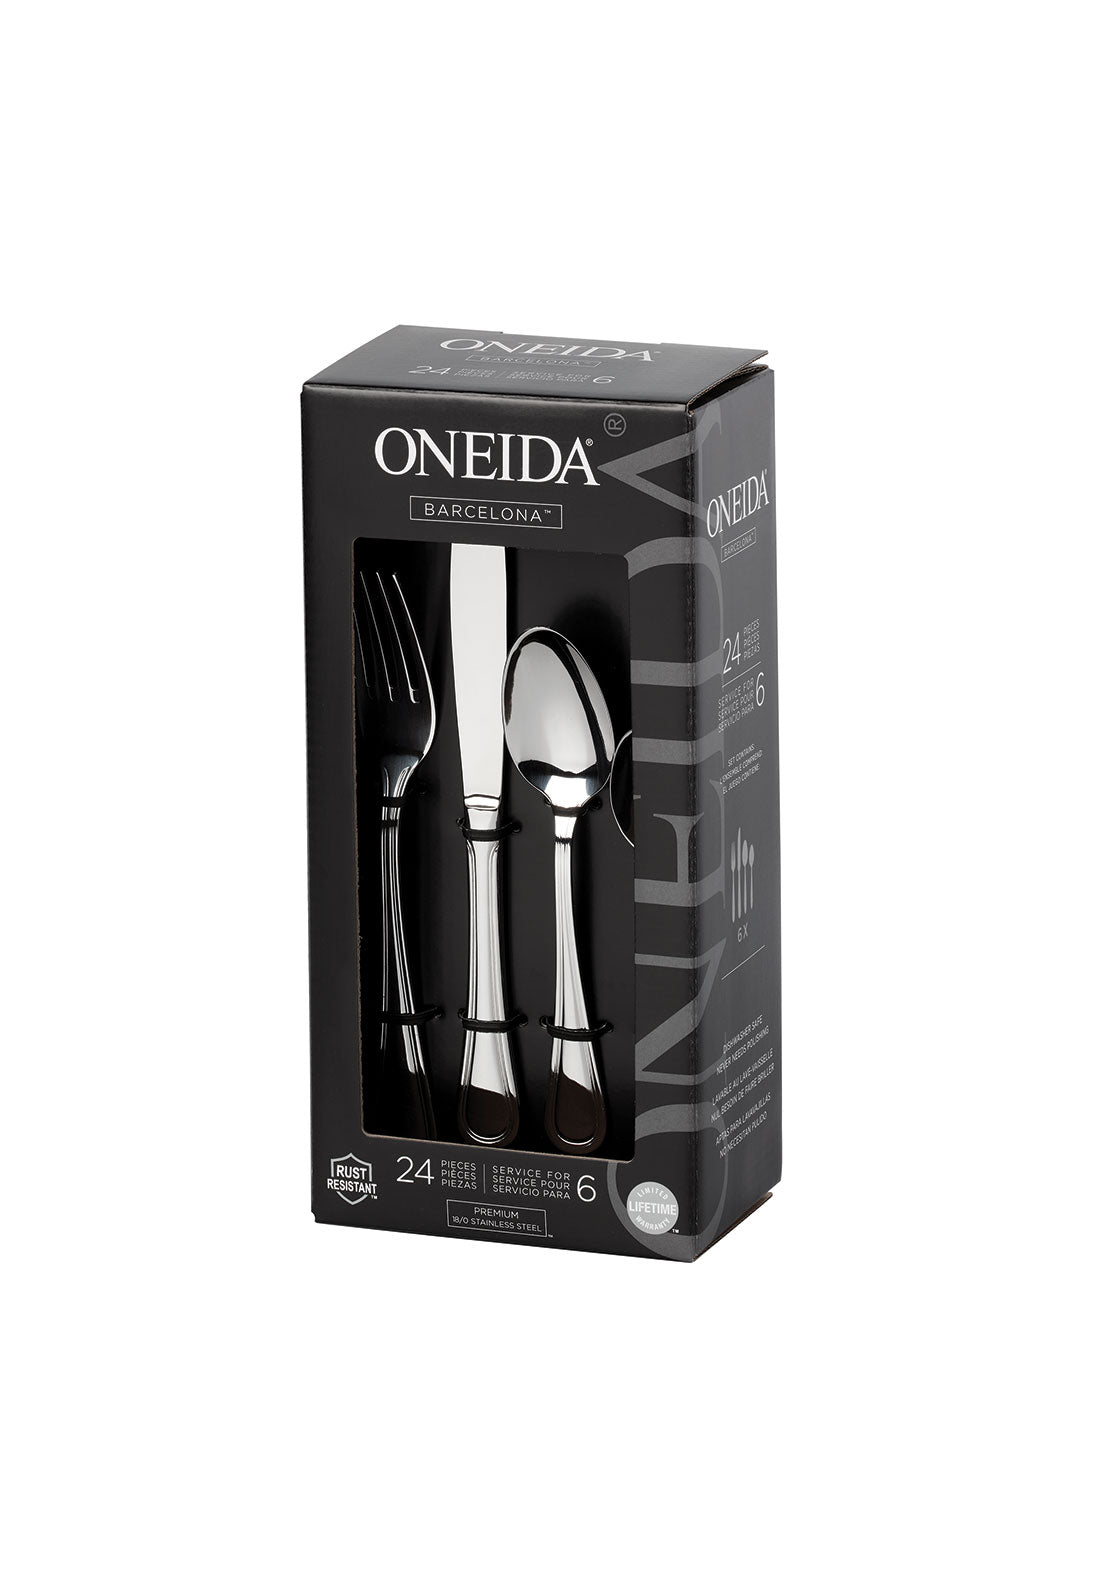 Meyers Oneida Barcelona 24 Piece Cutlery Set 1 Shaws Department Stores